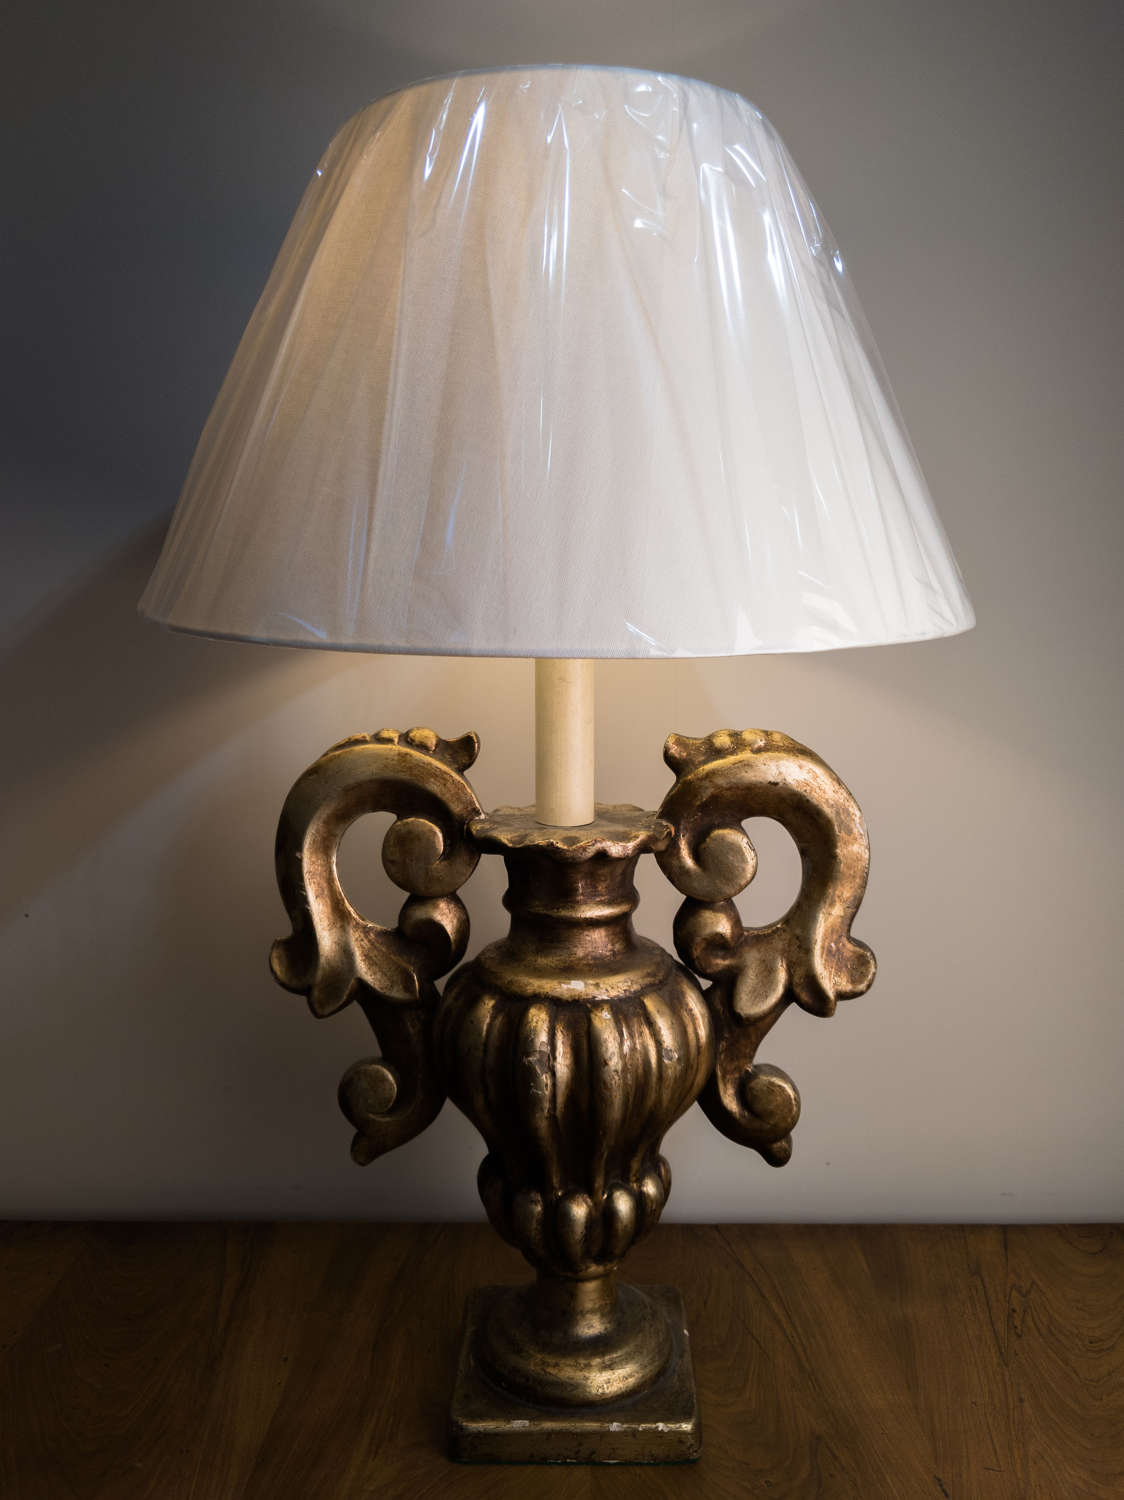 Circa 1920 A French Gilt Wood Table Lamp